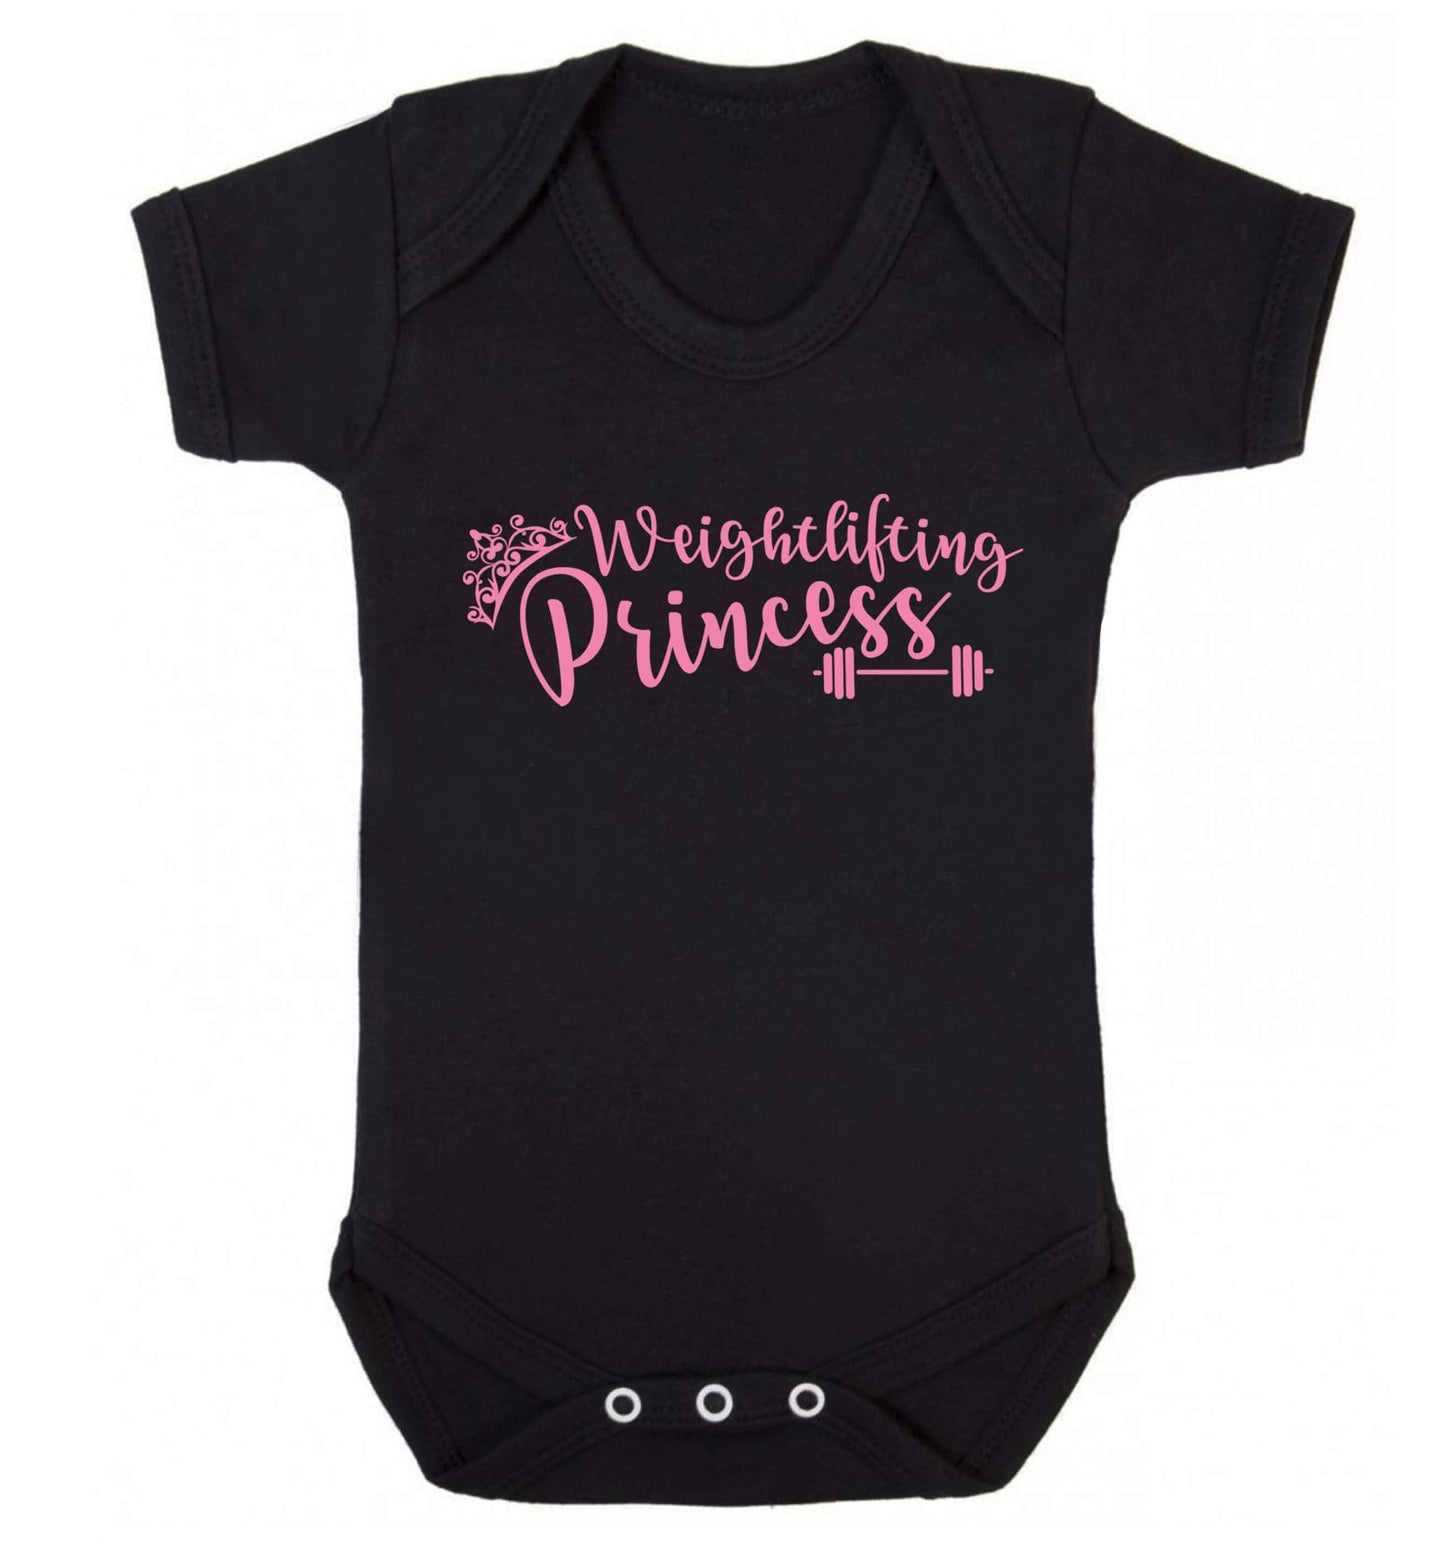 Weightlifting princess Baby Vest black 18-24 months